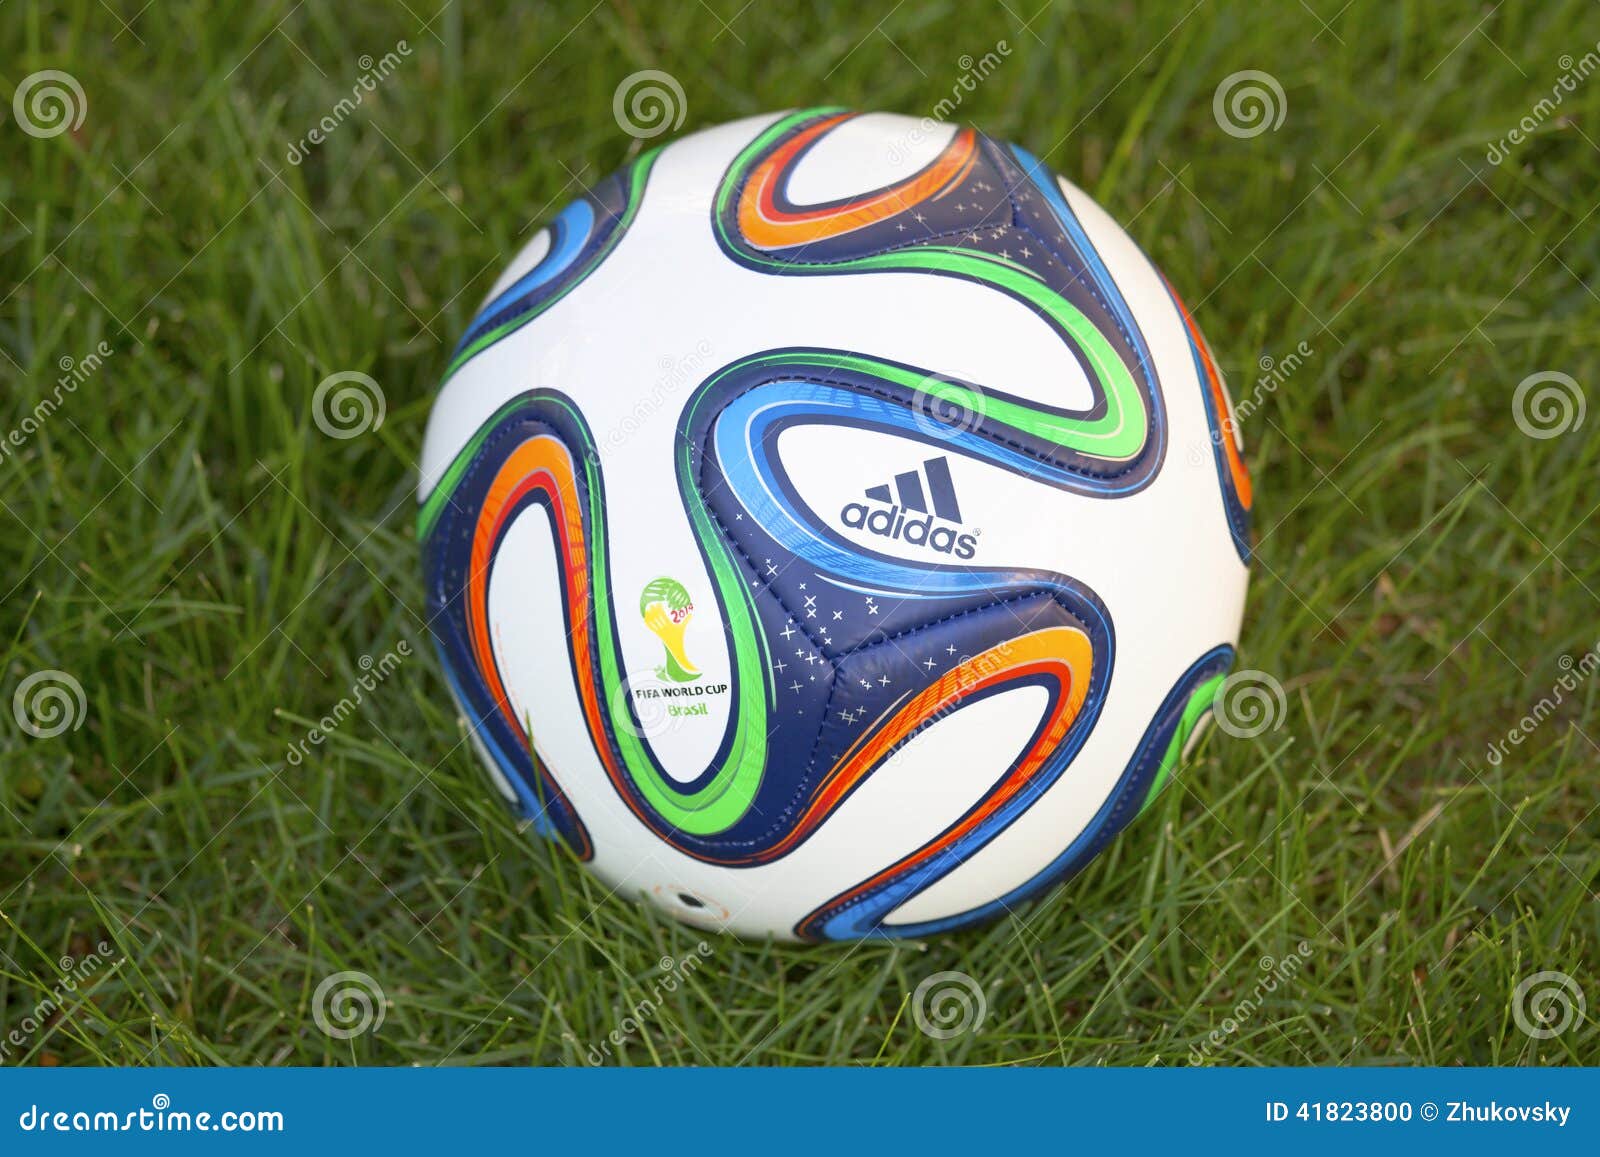 Brazuca Soccer Ball on Grass Editorial Image - Image of orange, grass:  41823800